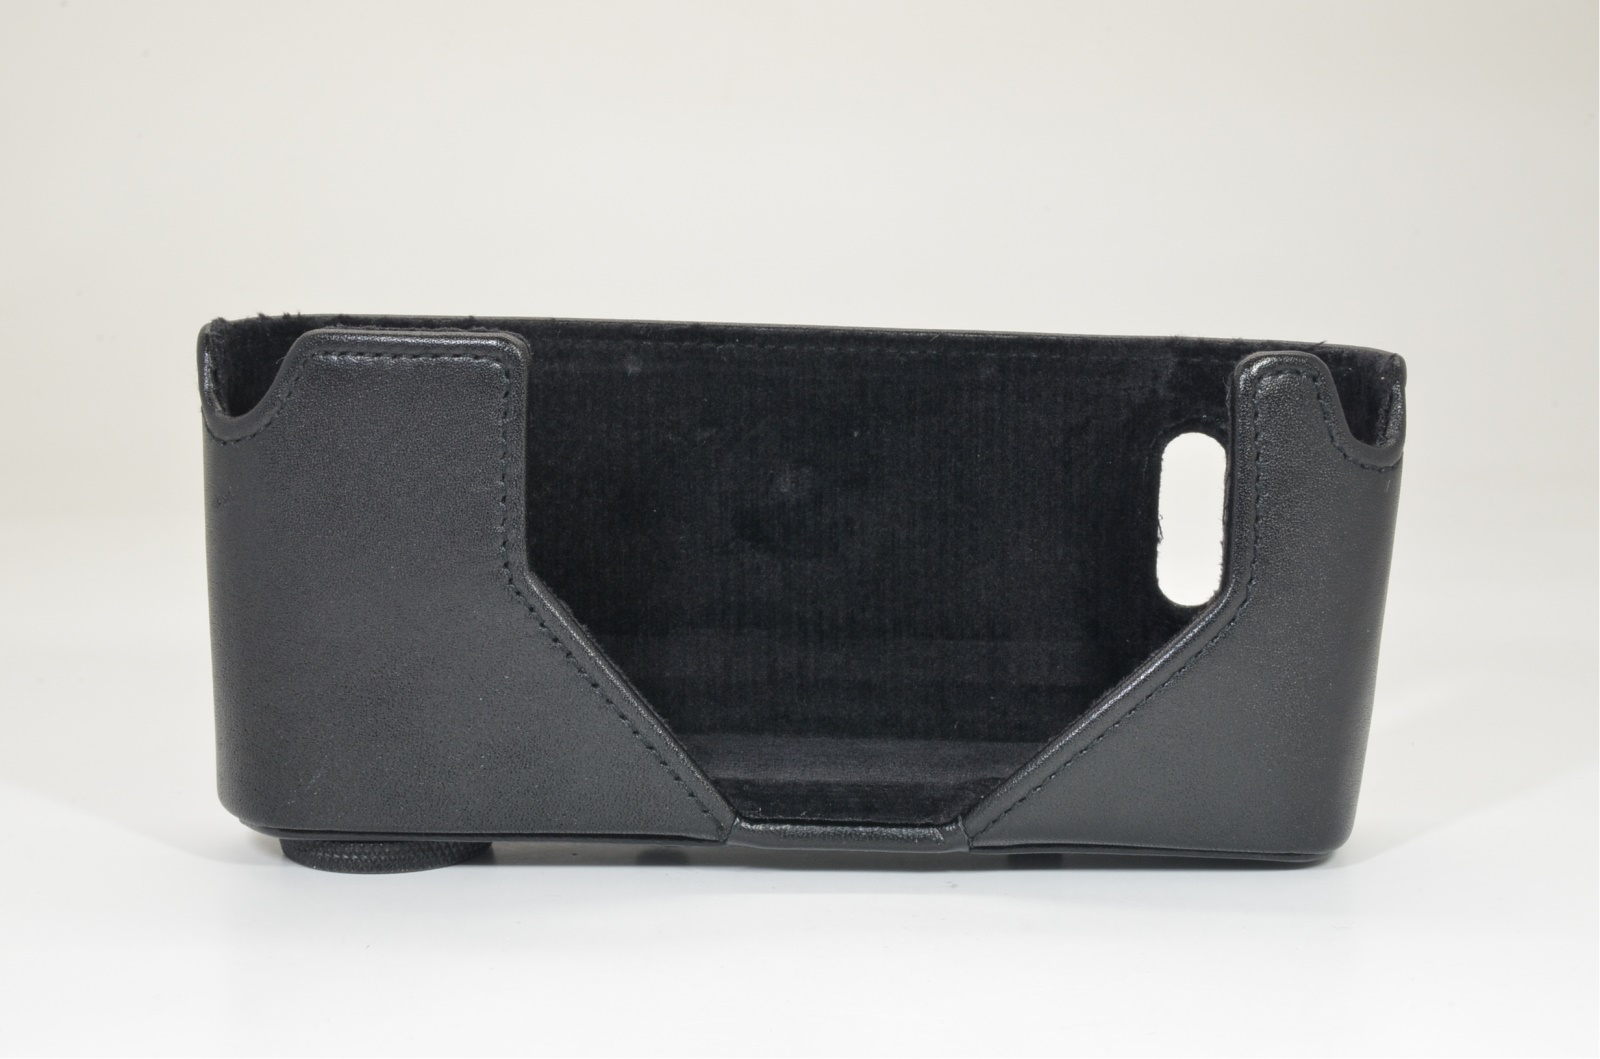 cosina zeiss ikon zm leather camera case semi-hard case from japan